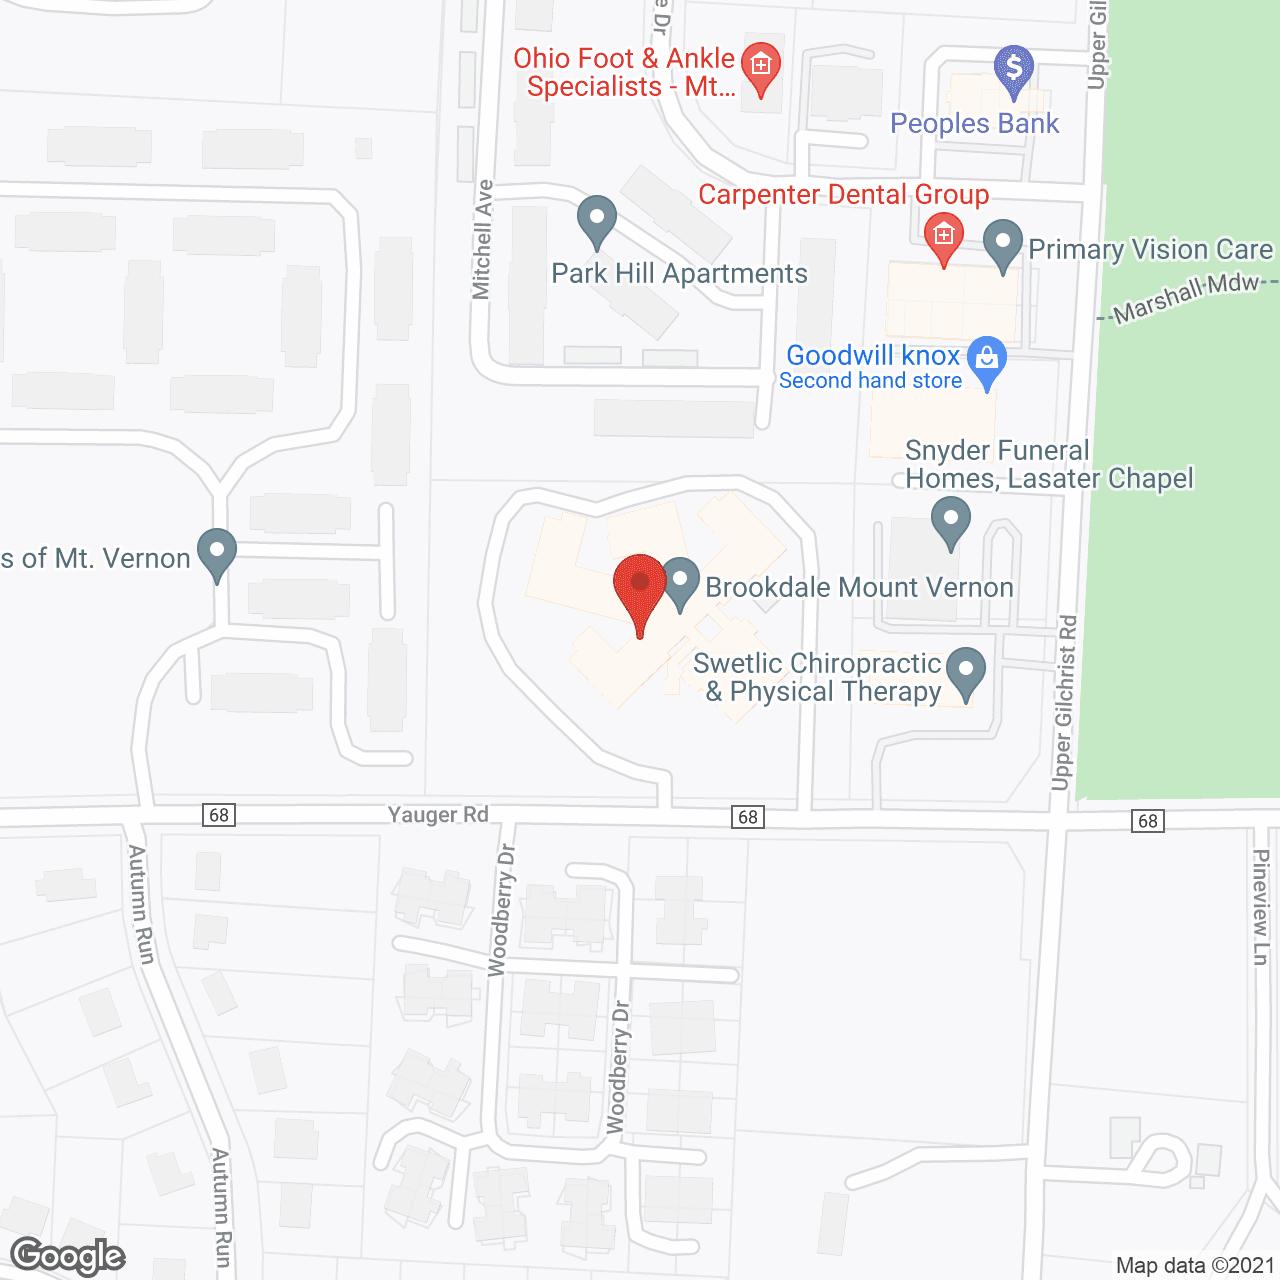 Brookdale Mount Vernon in google map